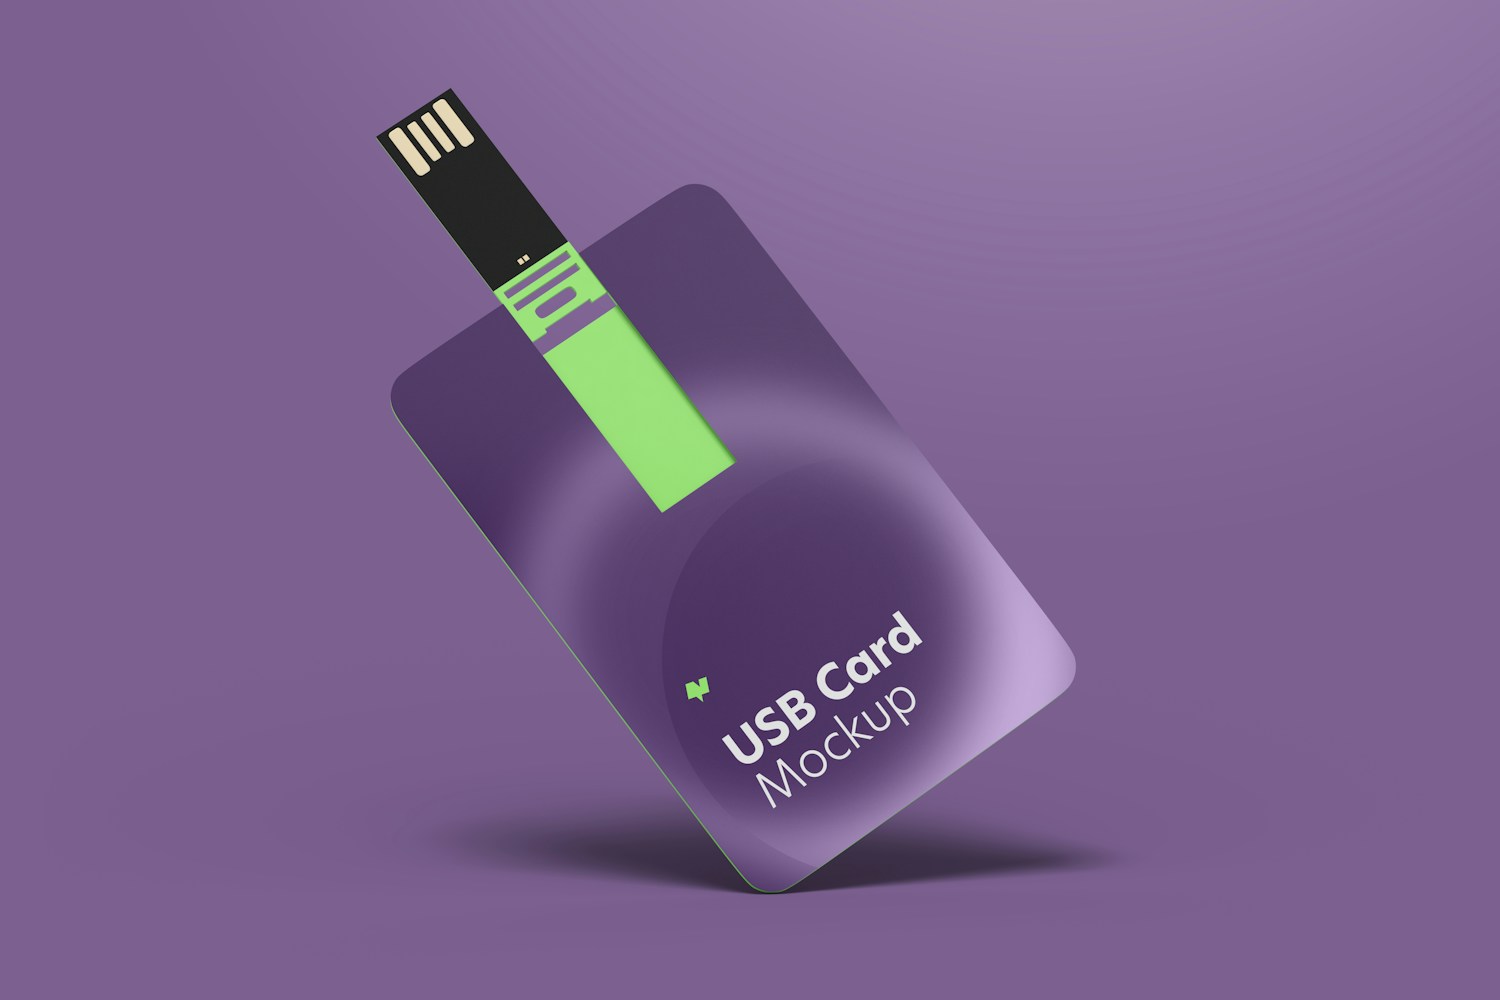 USB Card Mockup